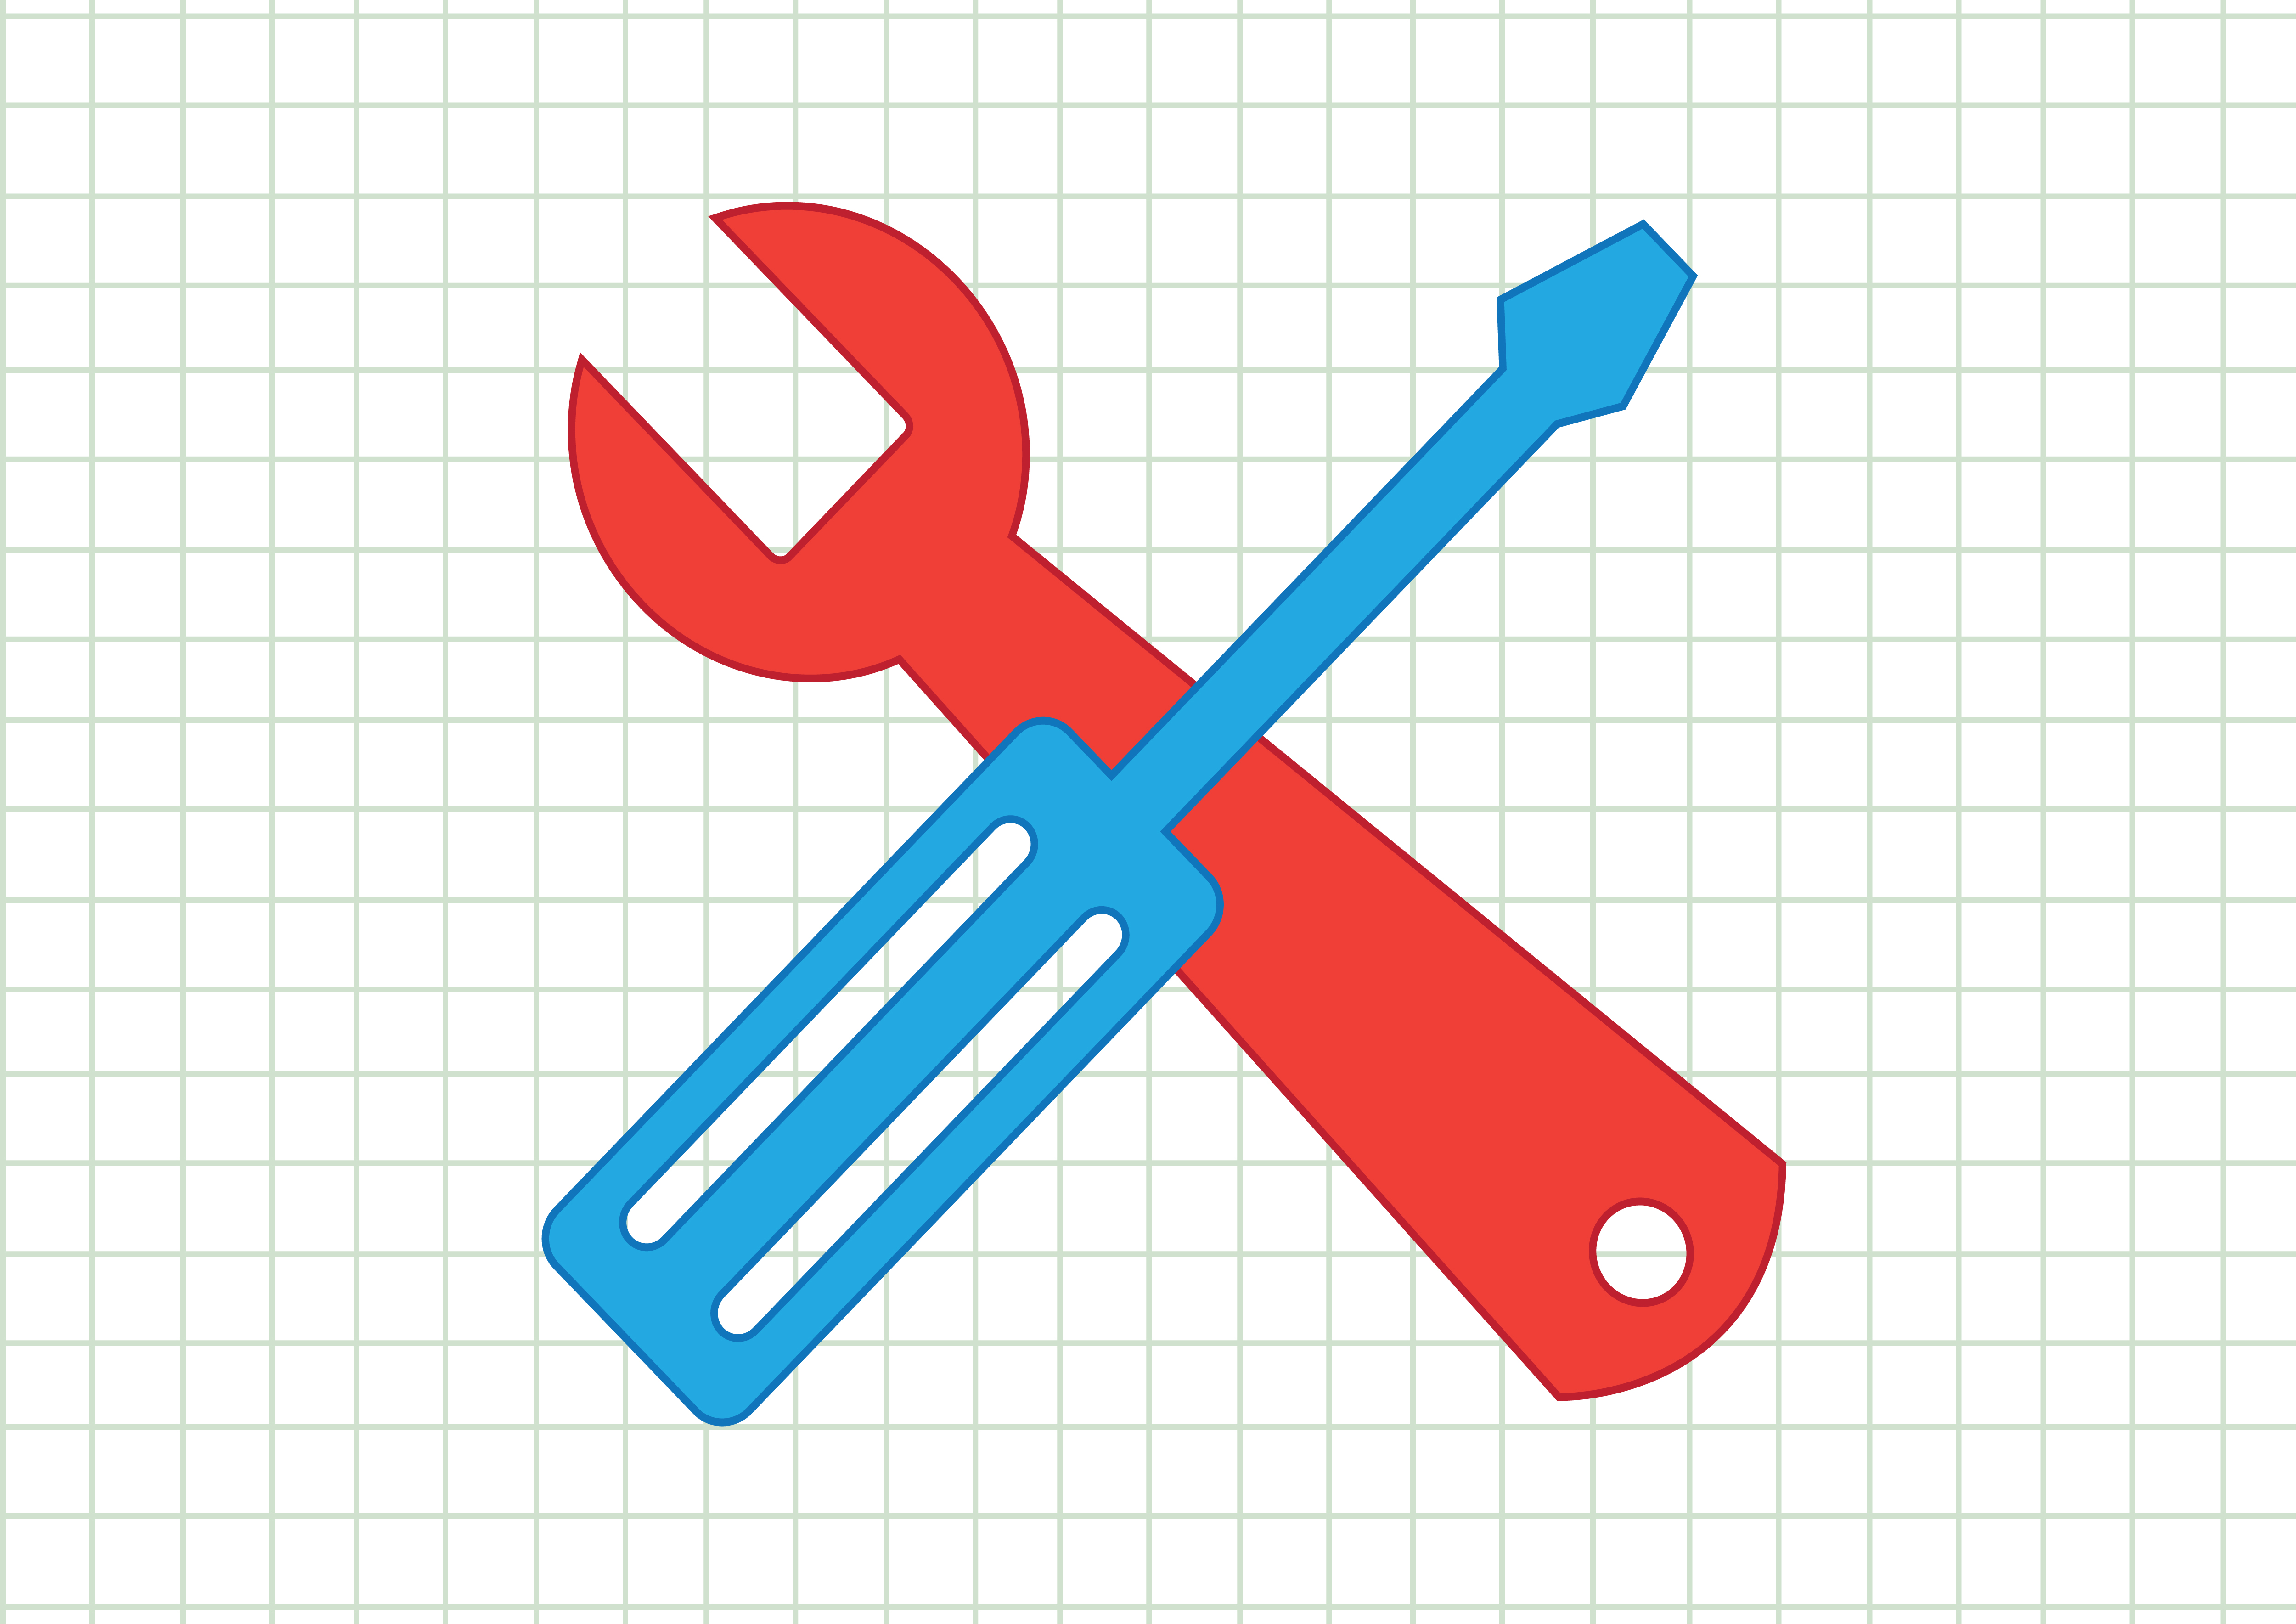 quickbuild tool symbols